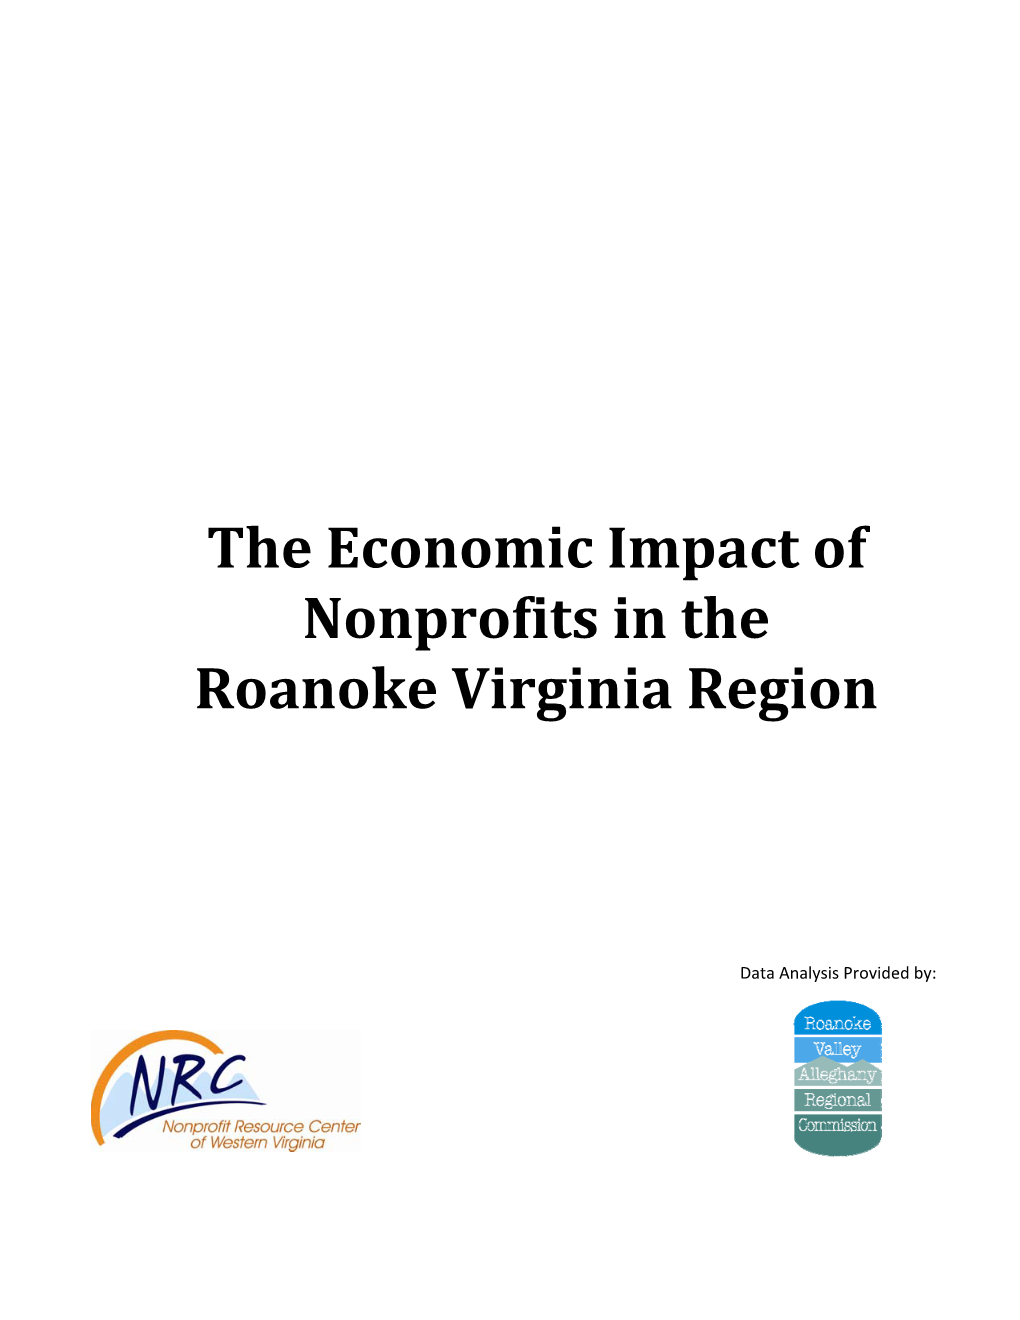 The Economic Impact of Nonprofits in the Roanoke Virginia Region